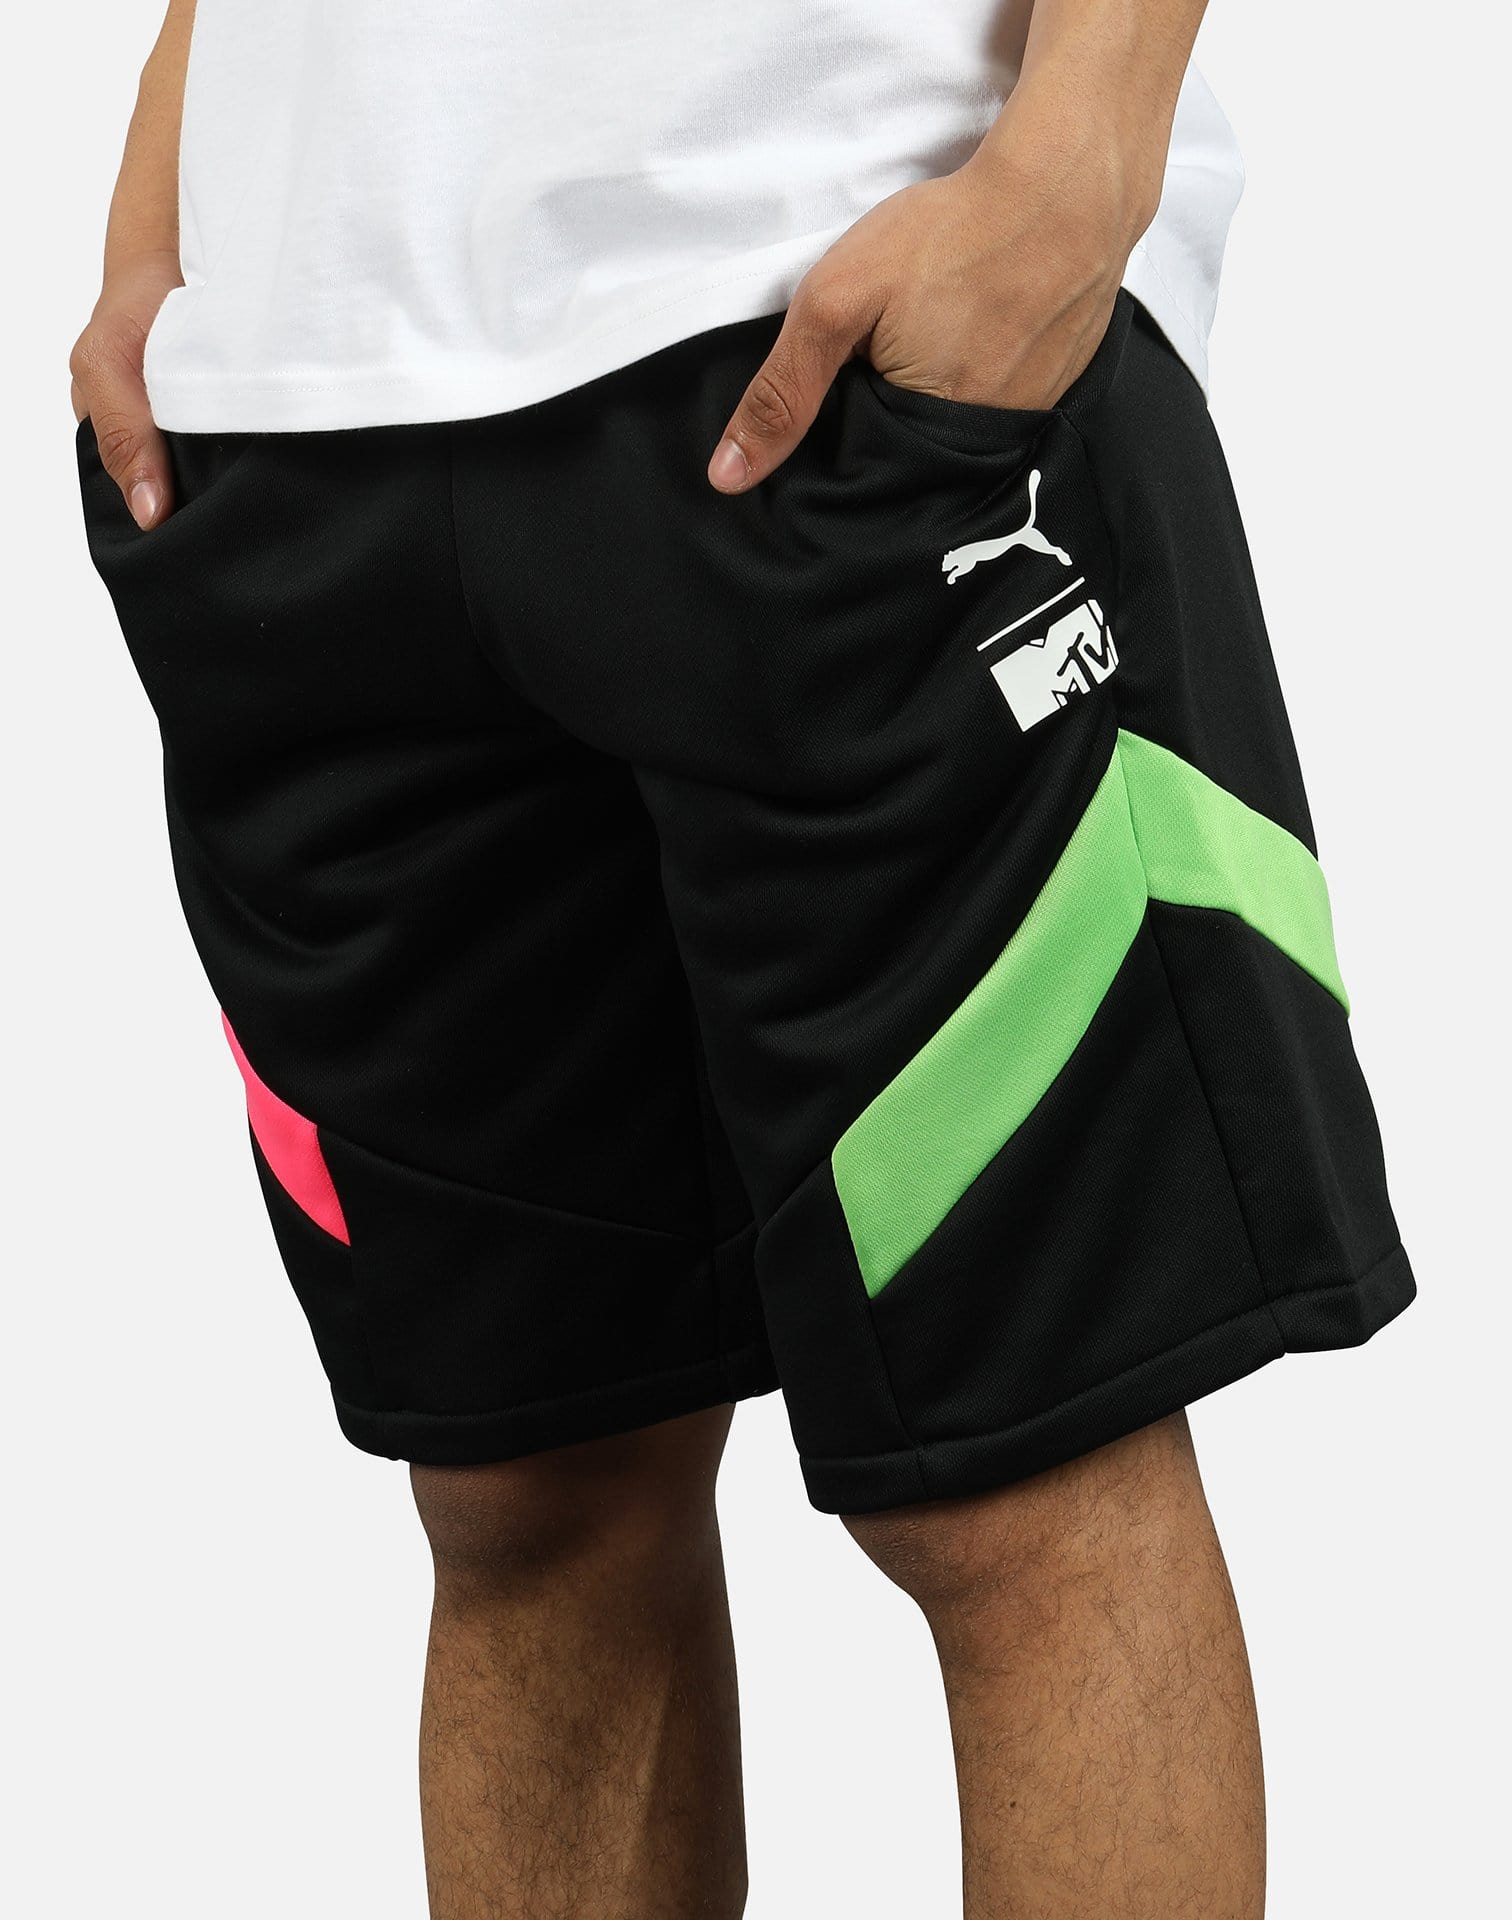 puma mtv shorts - 53% OFF - tajpalace.net